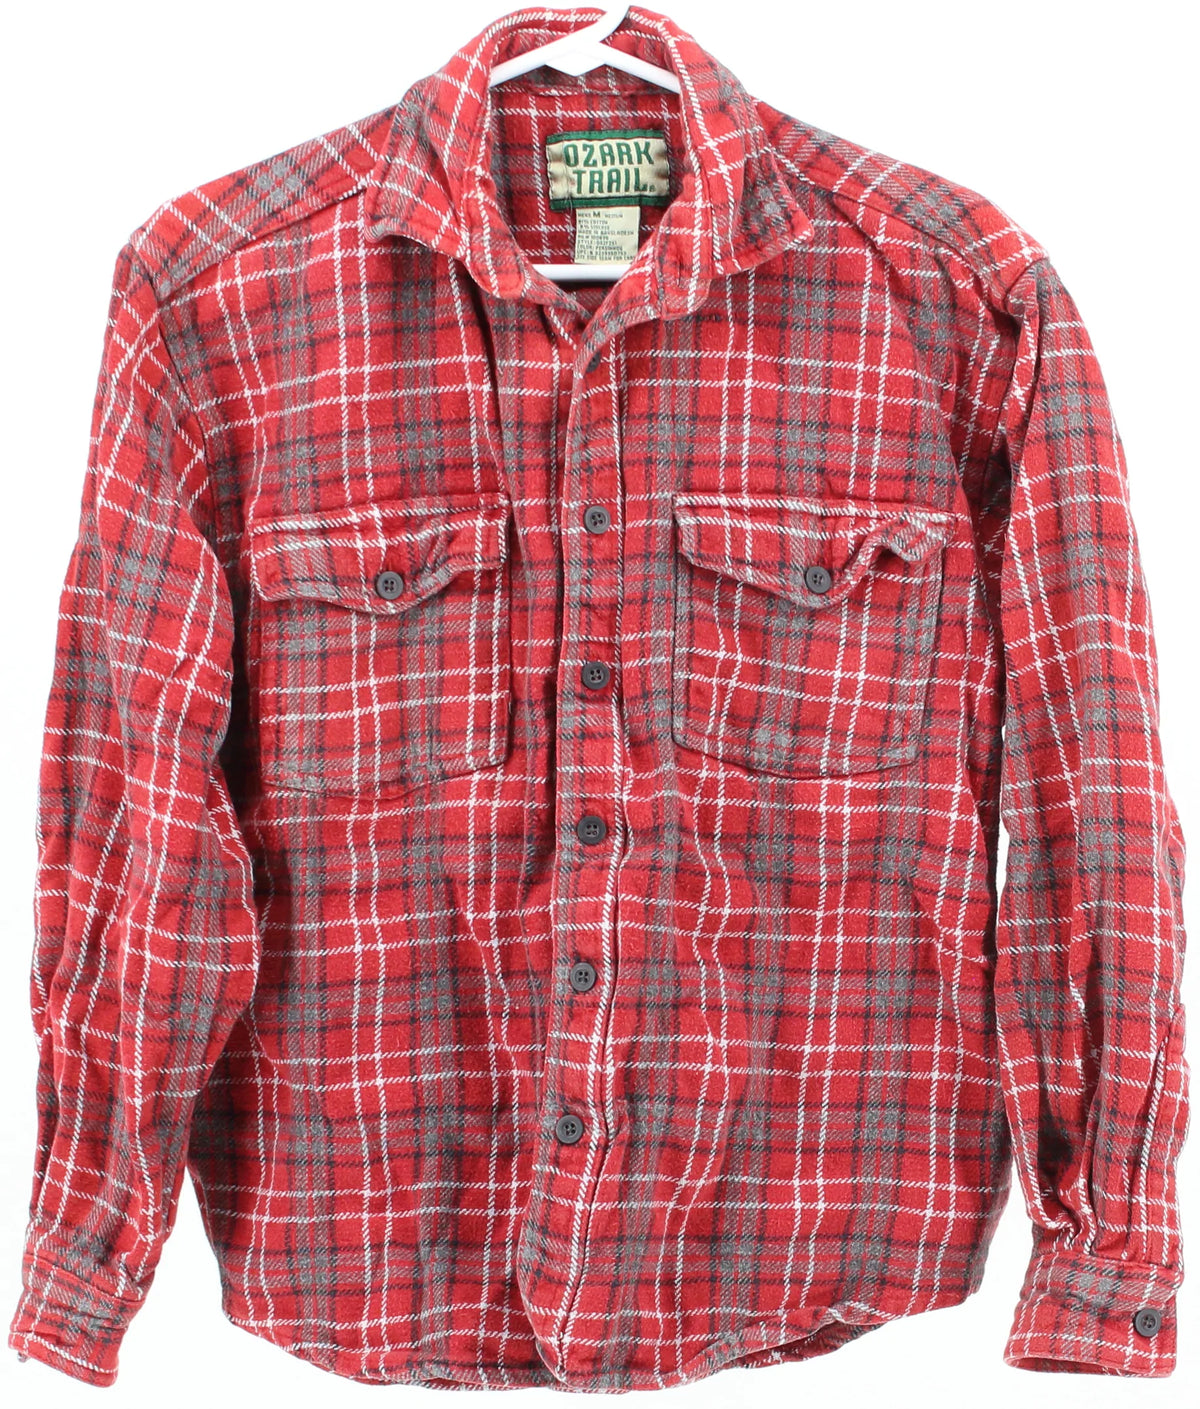 Ozark Trail Red and Grey Plaid Flannel Shirt